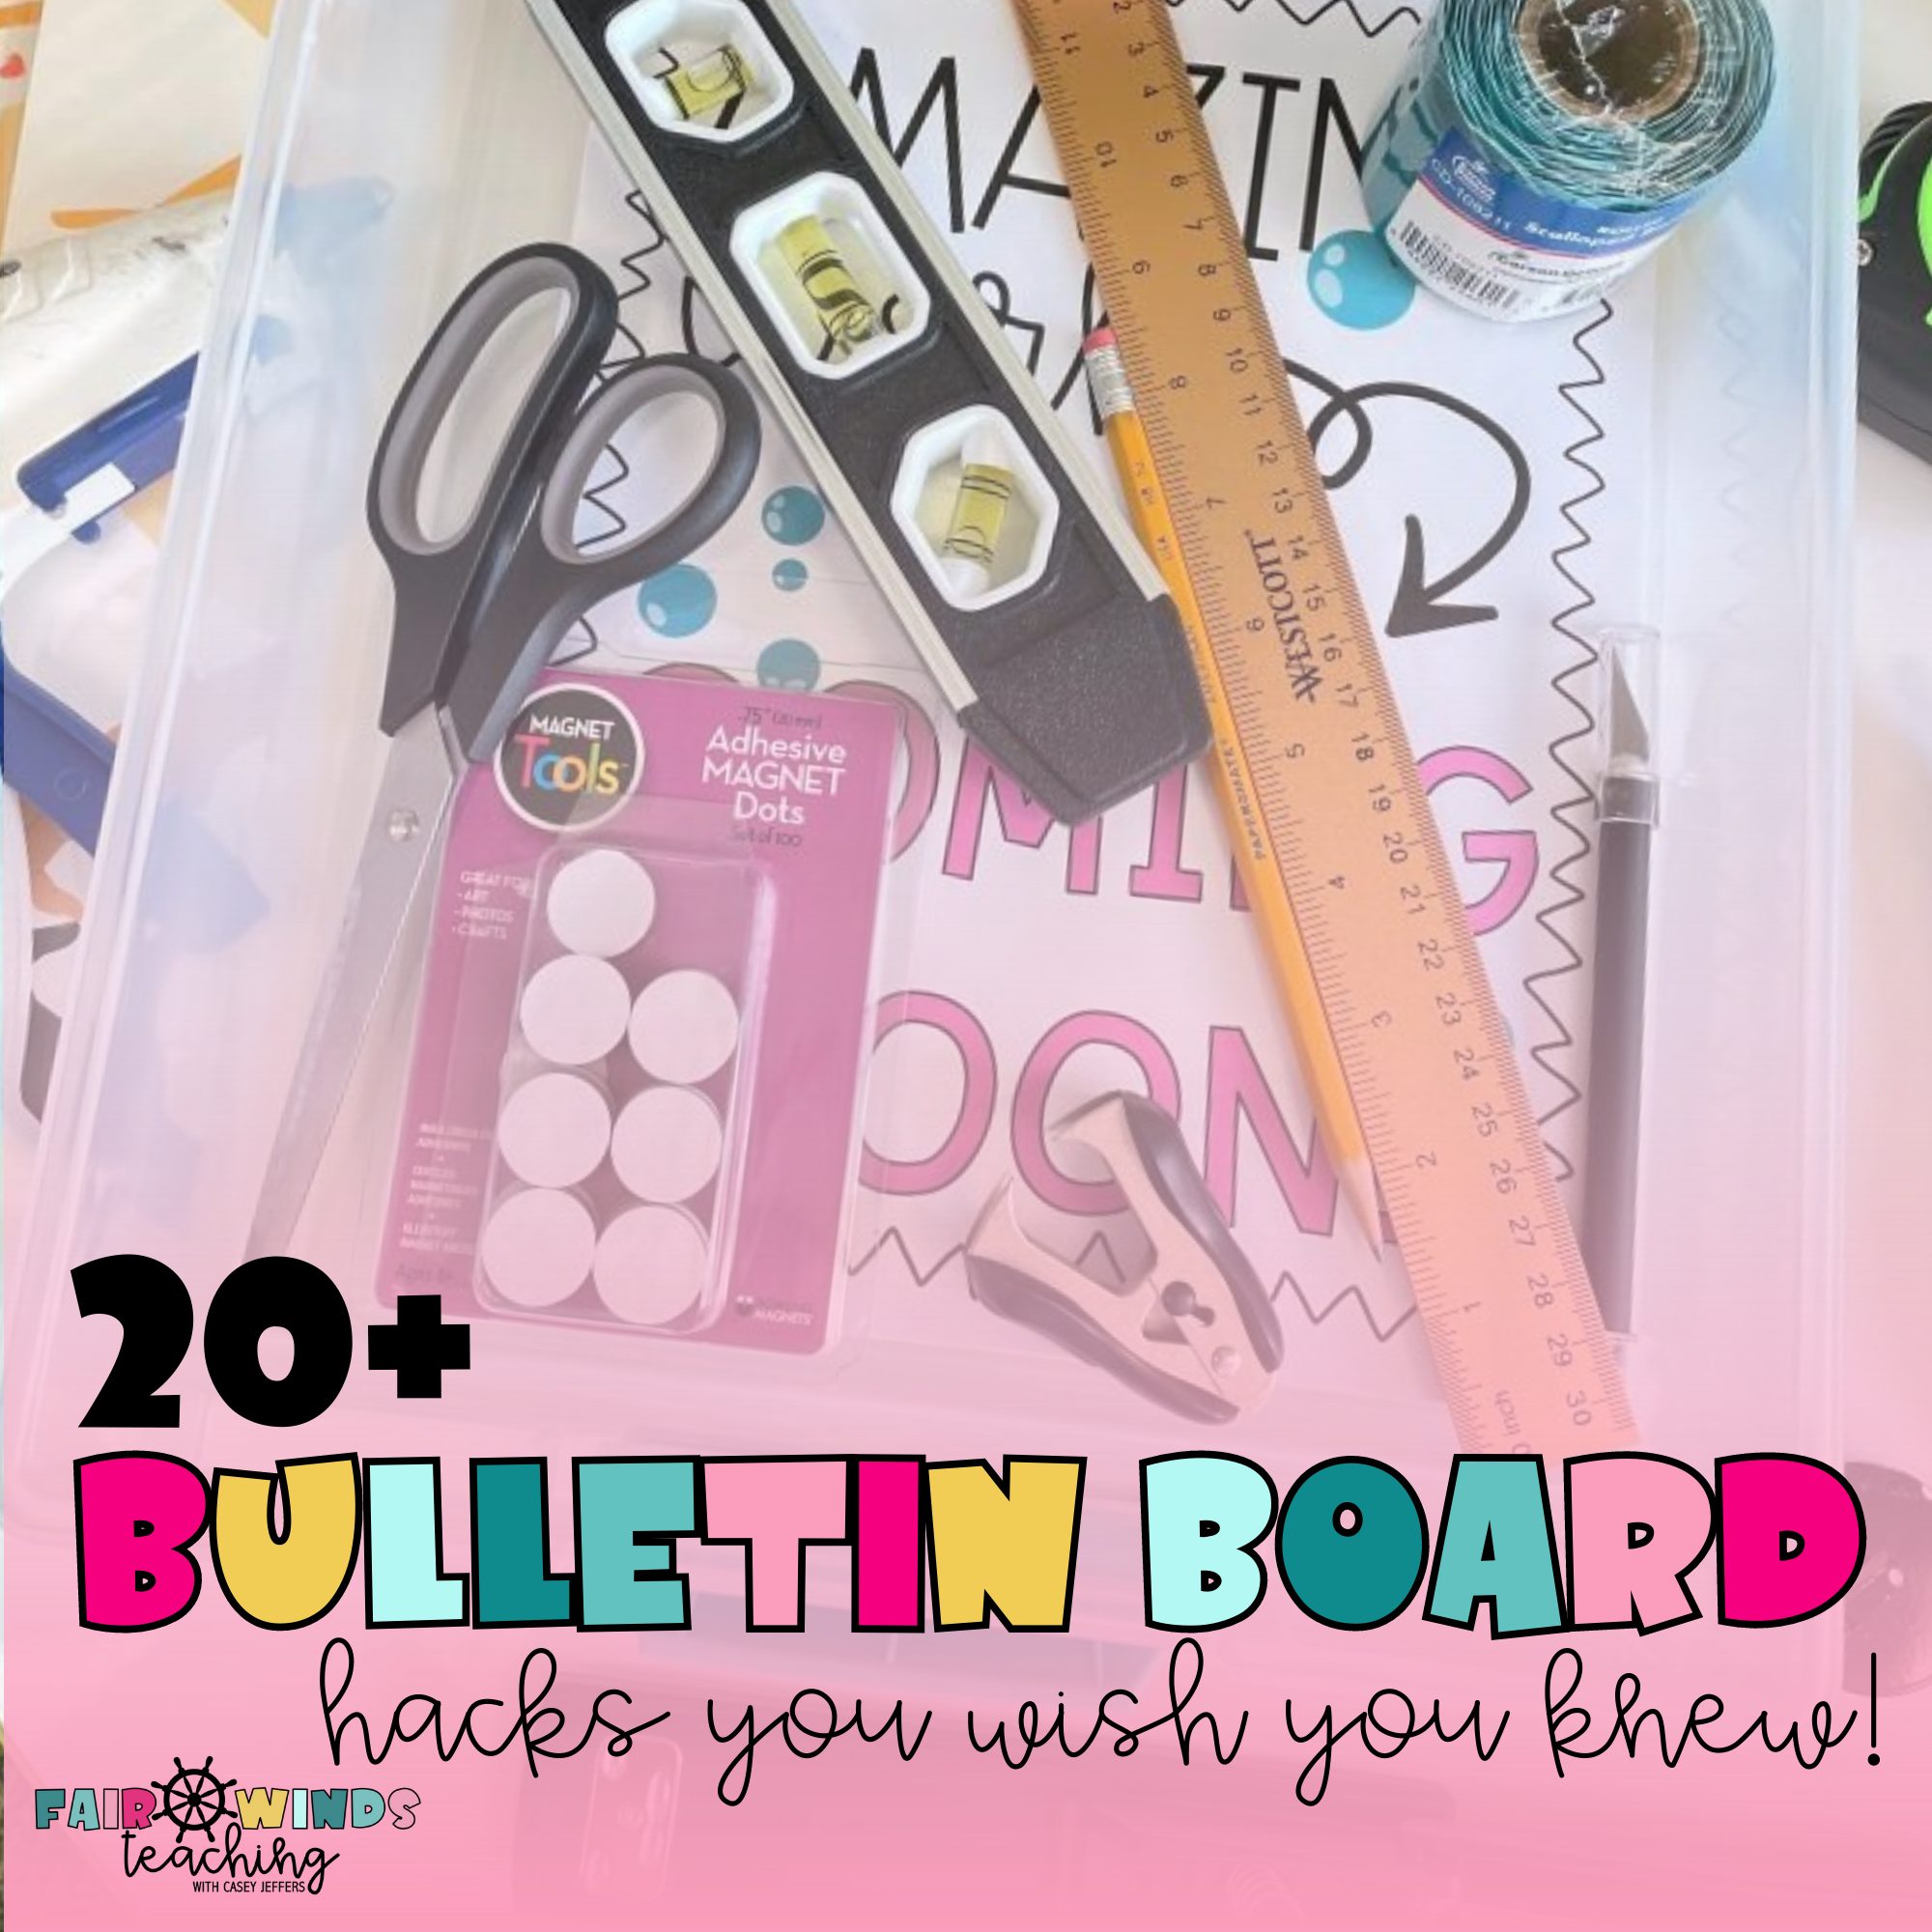 20+ Bulletin Board Hacks You Wish You Knew!